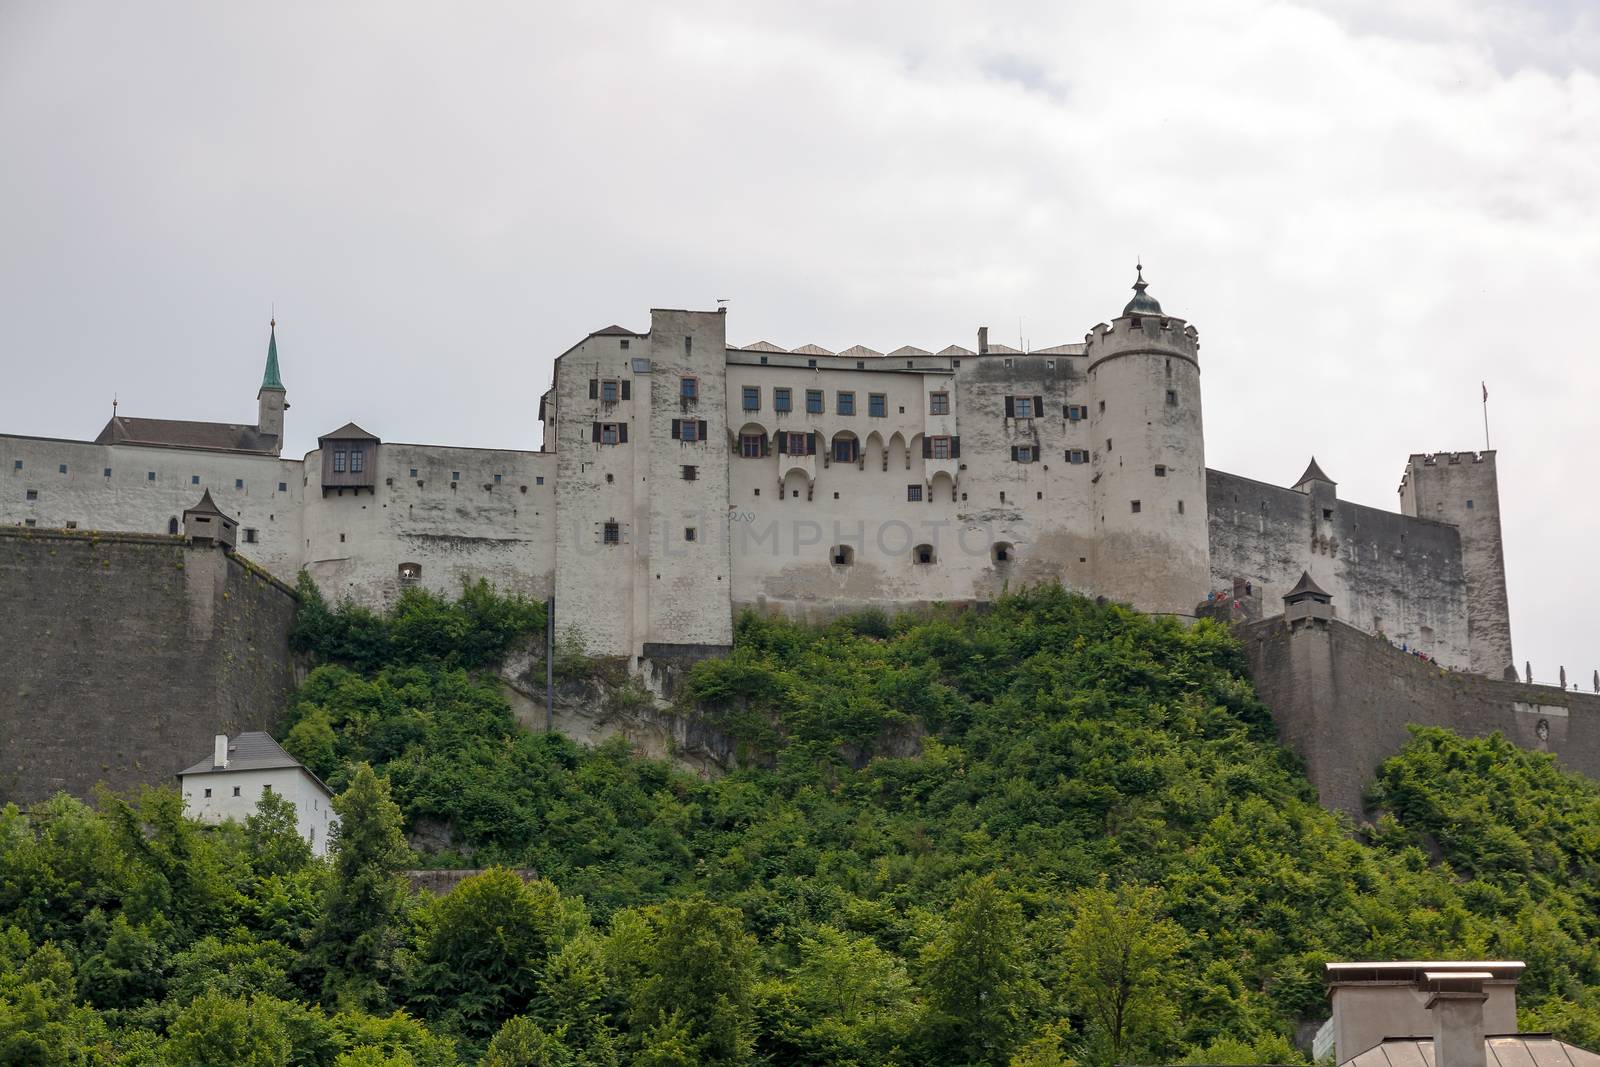 View of Hohensalzburg, Salzburg: Castle (Festung Hohensalzburg) - one of largest medieval castles in Europe, Salzburger Land, Austria.